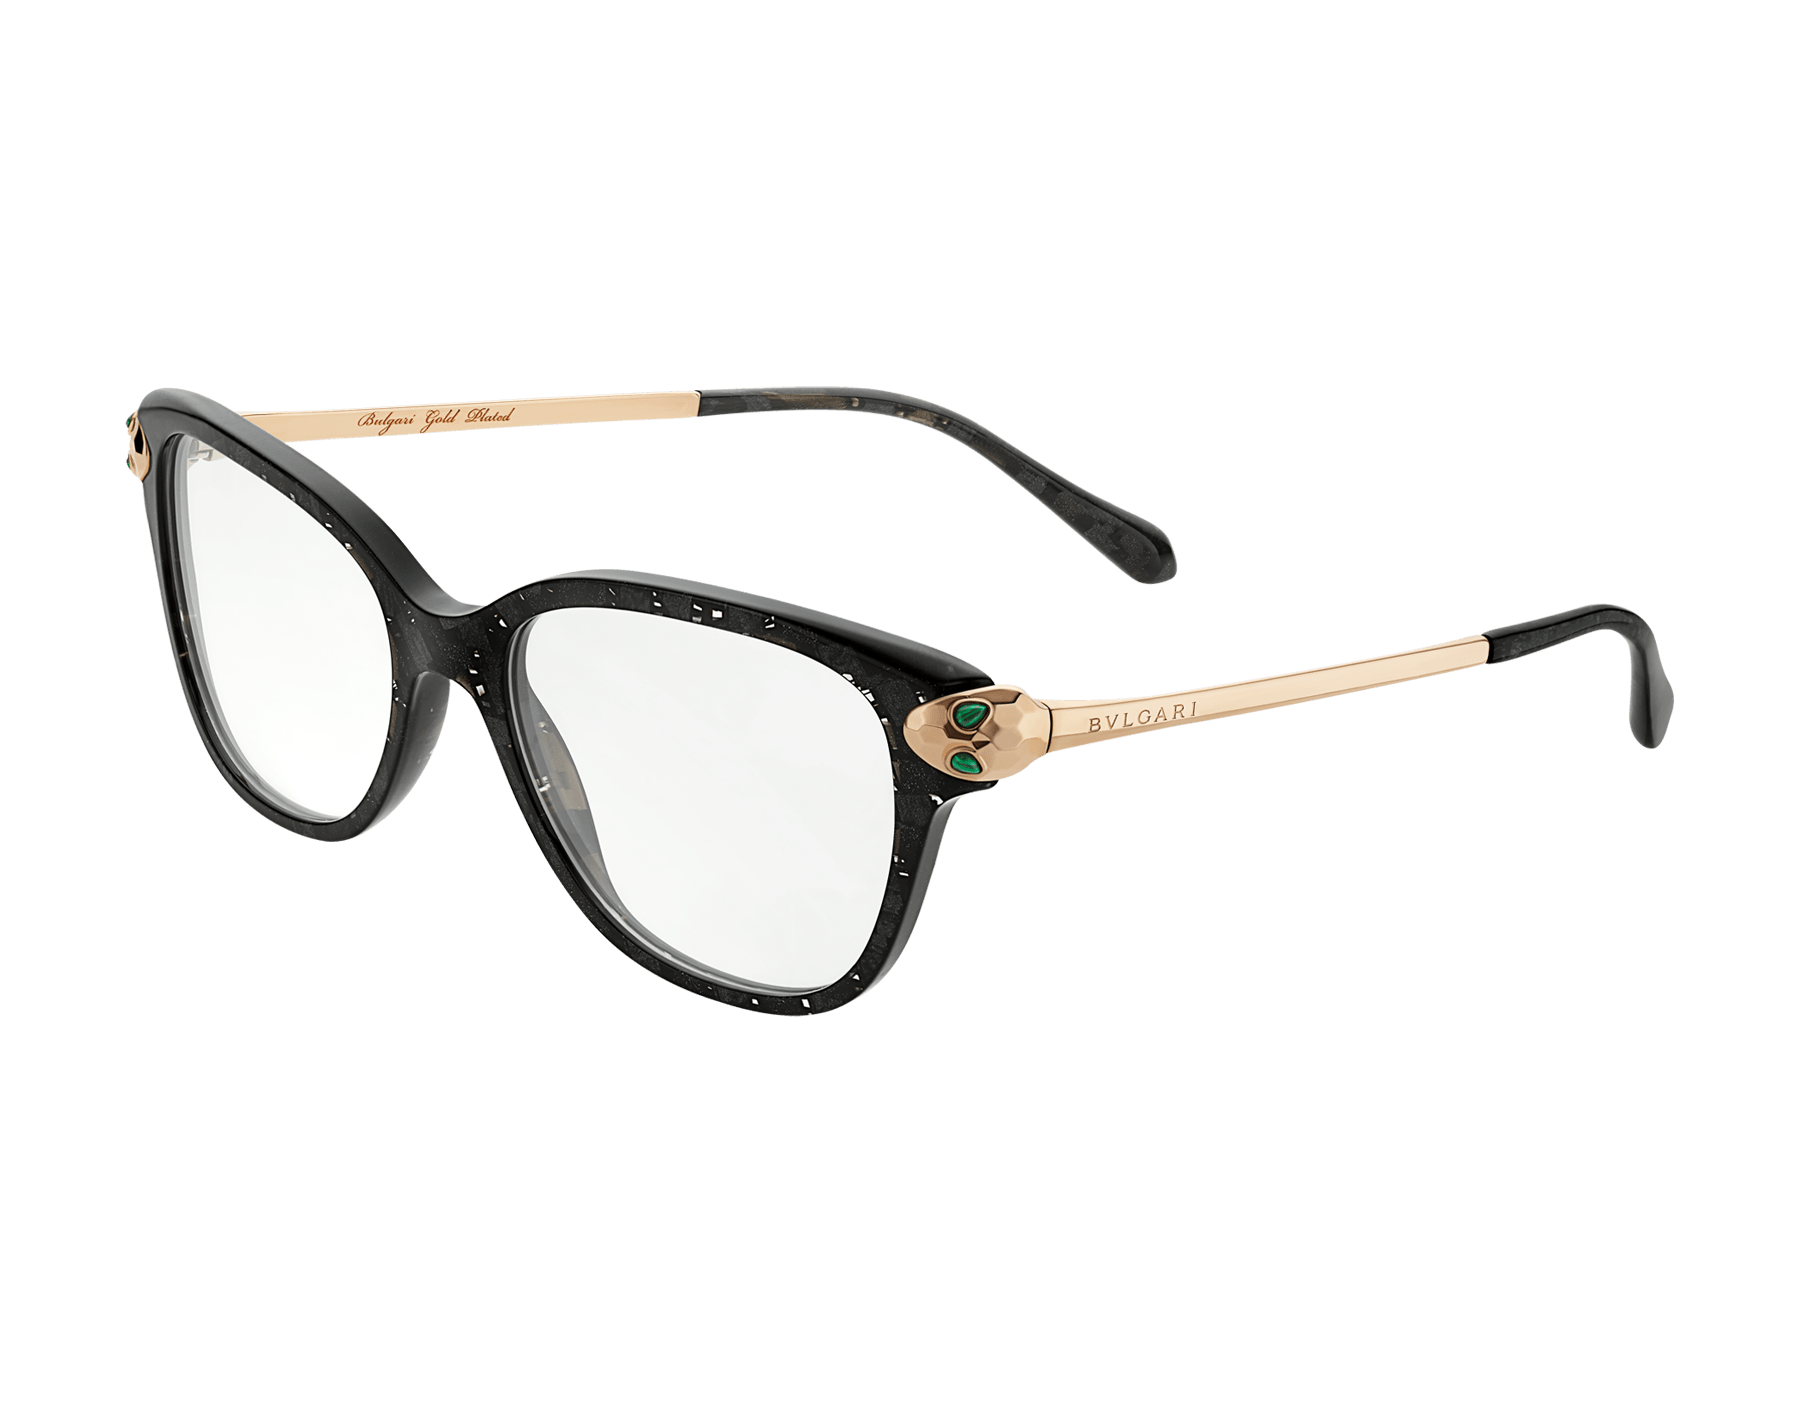 where to buy bvlgari eyeglass frames